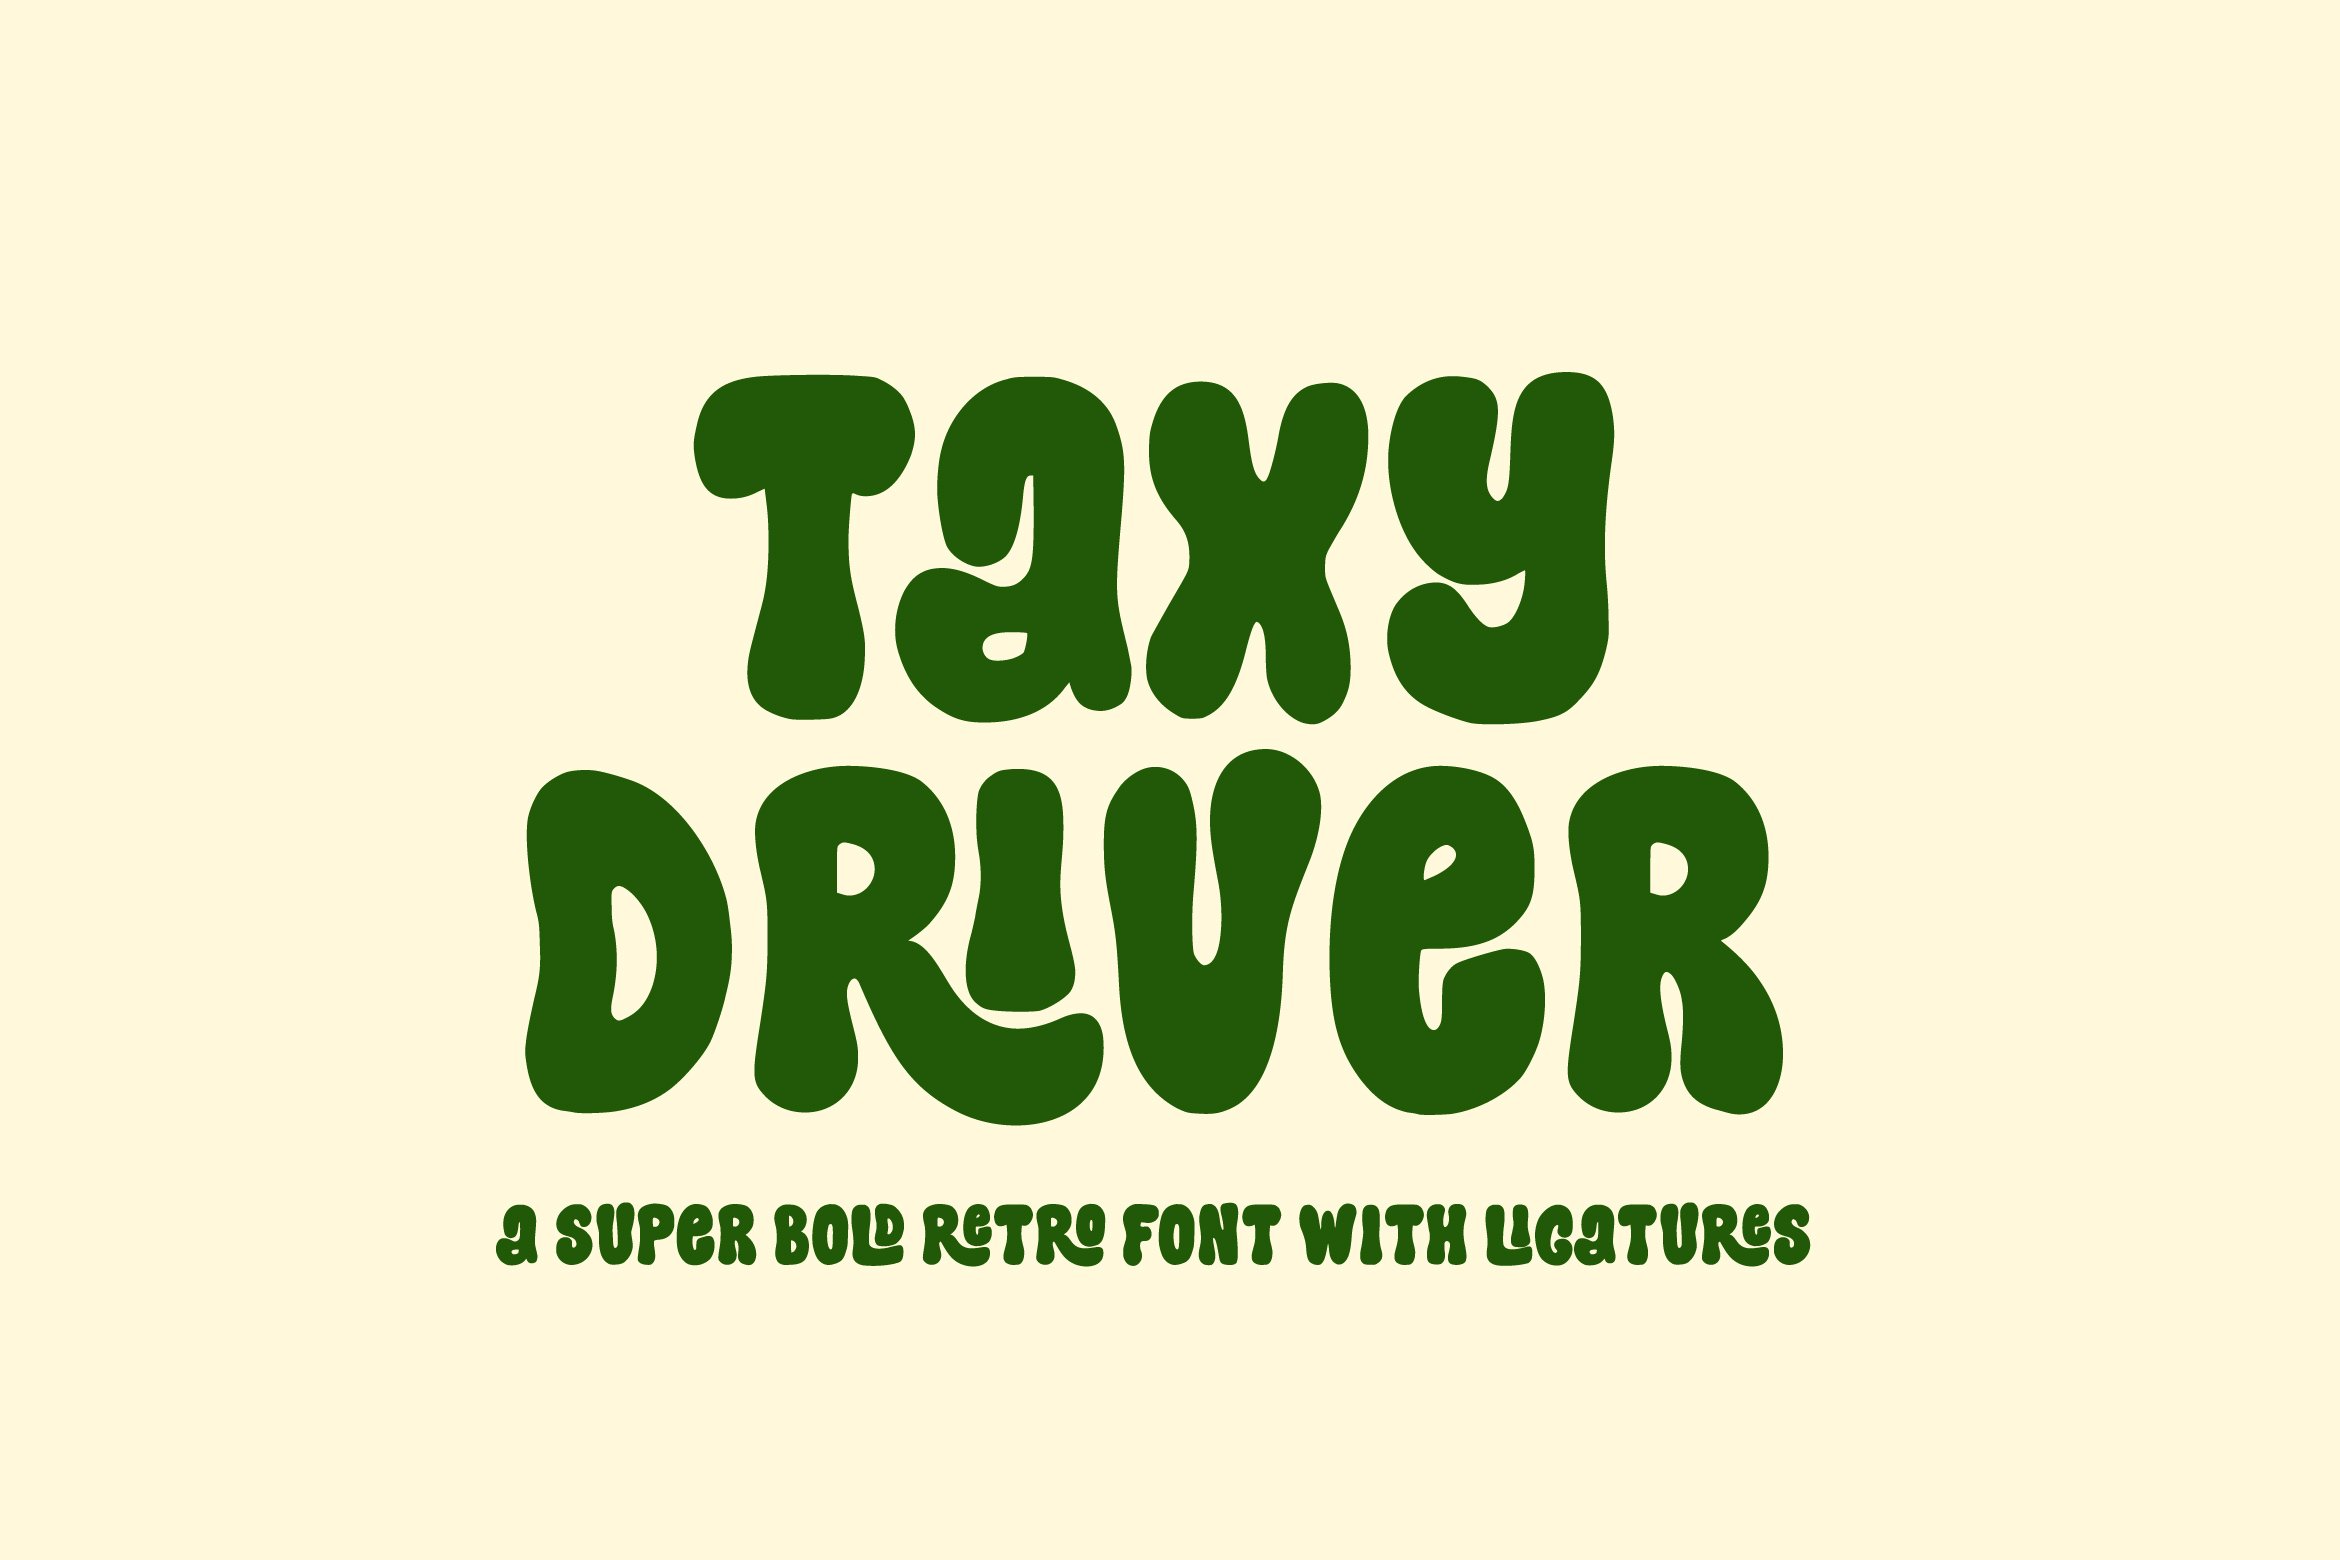 Taxy Driver Retro Bold Font cover image.